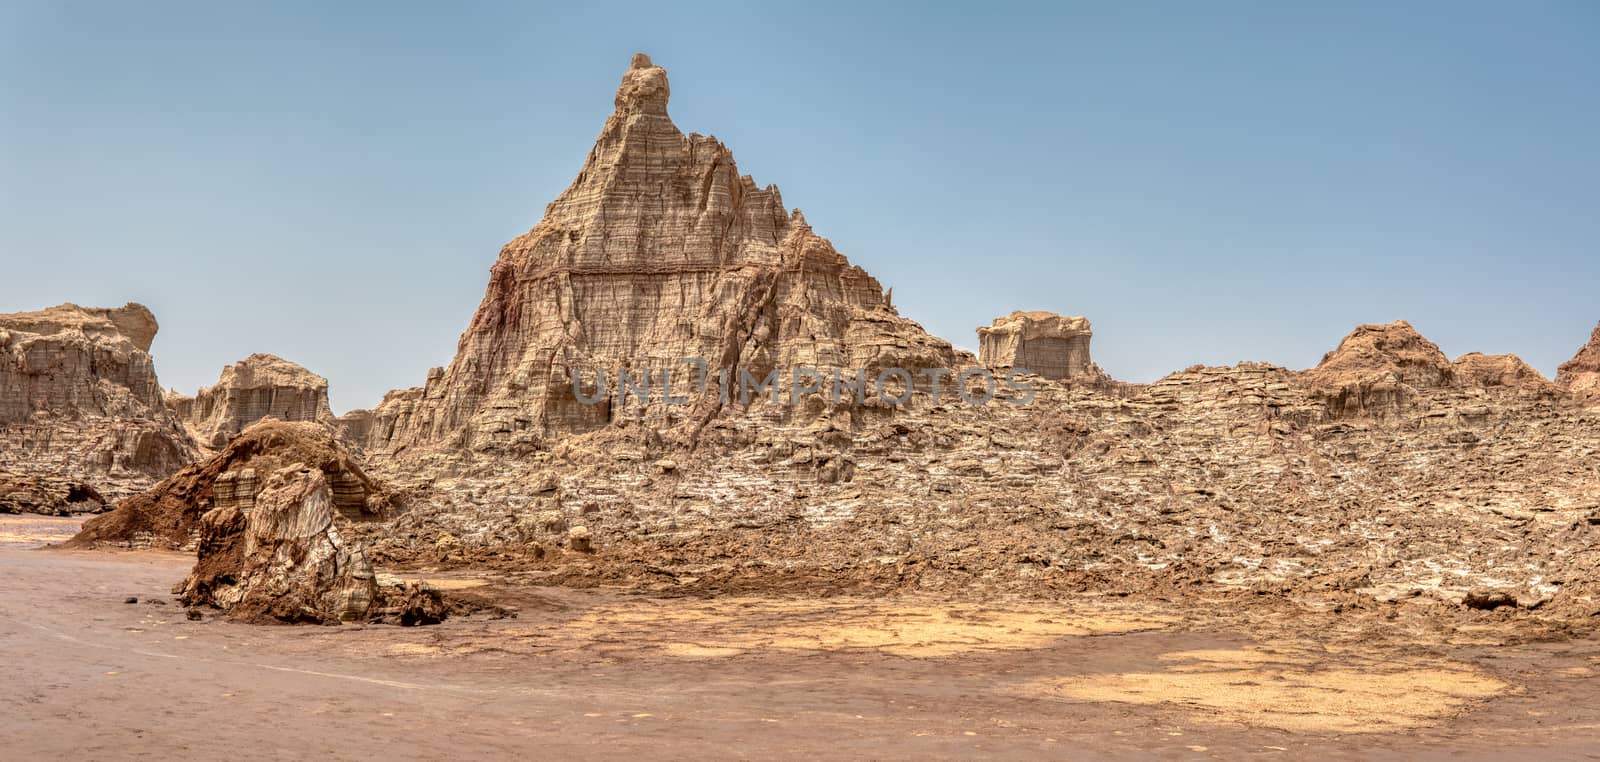 Rock city in Danakil depression, Ethiopia, Africa by artush